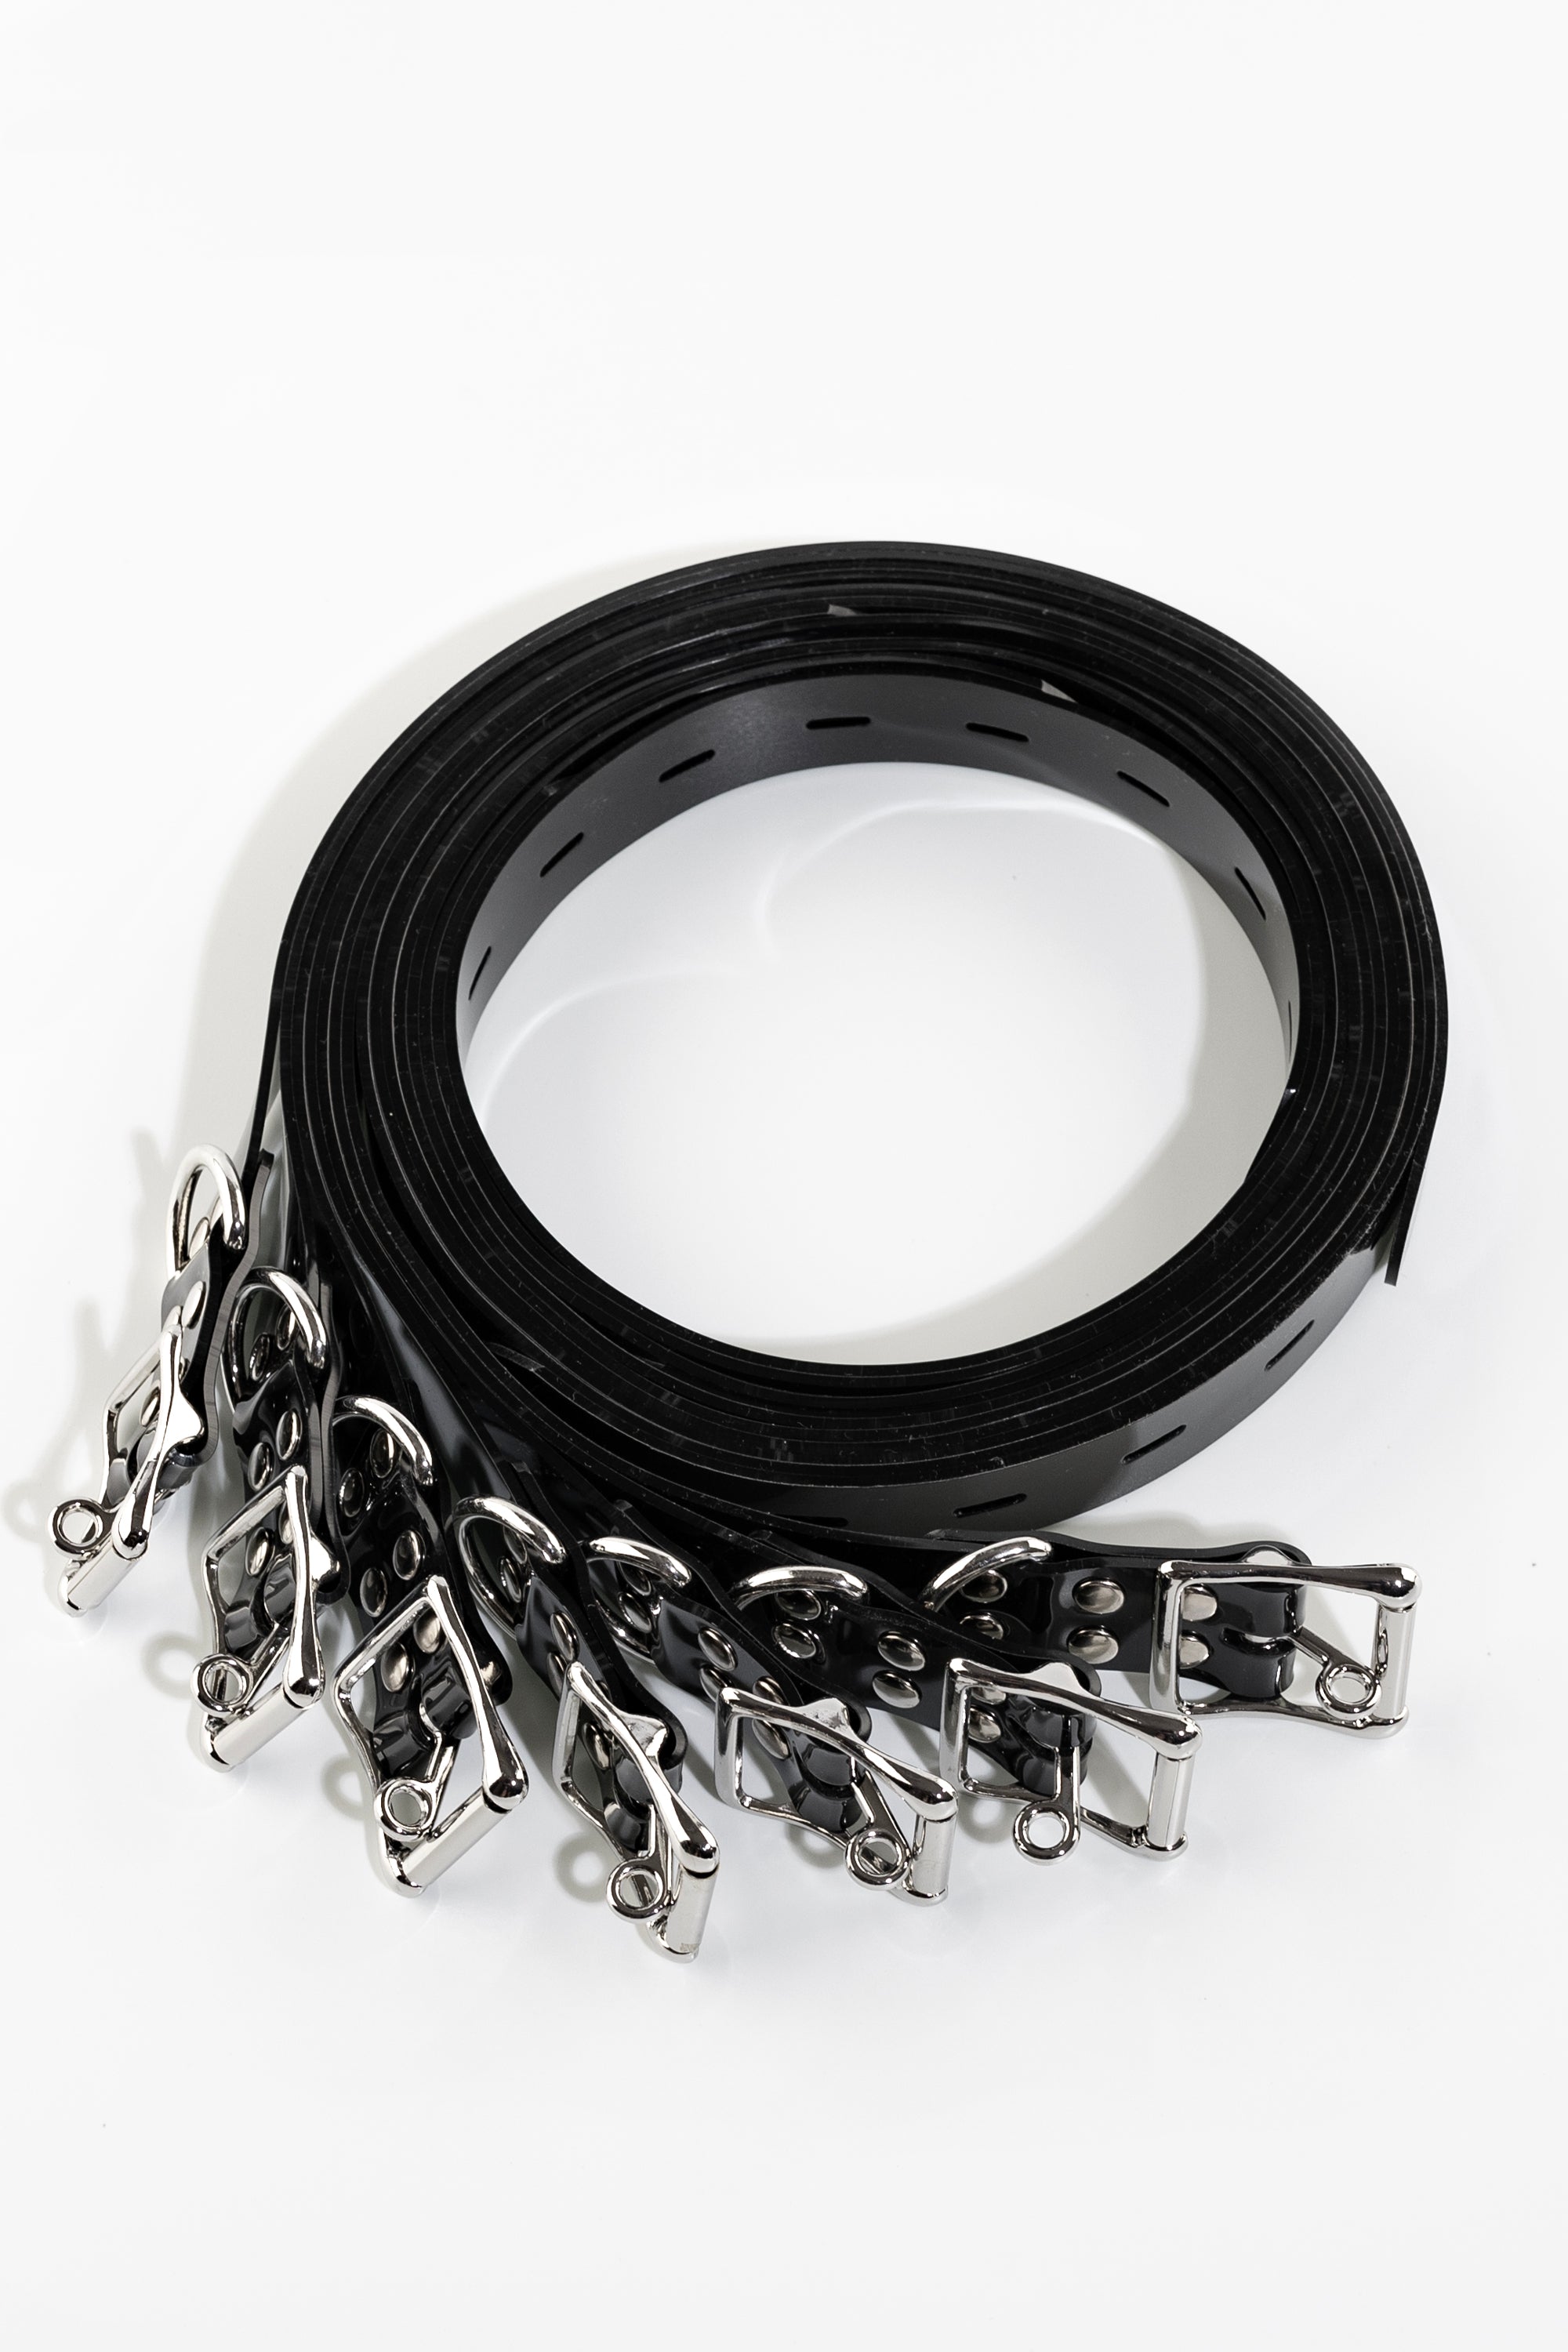 Bondage lockable straps set 25 mm, black/chrome